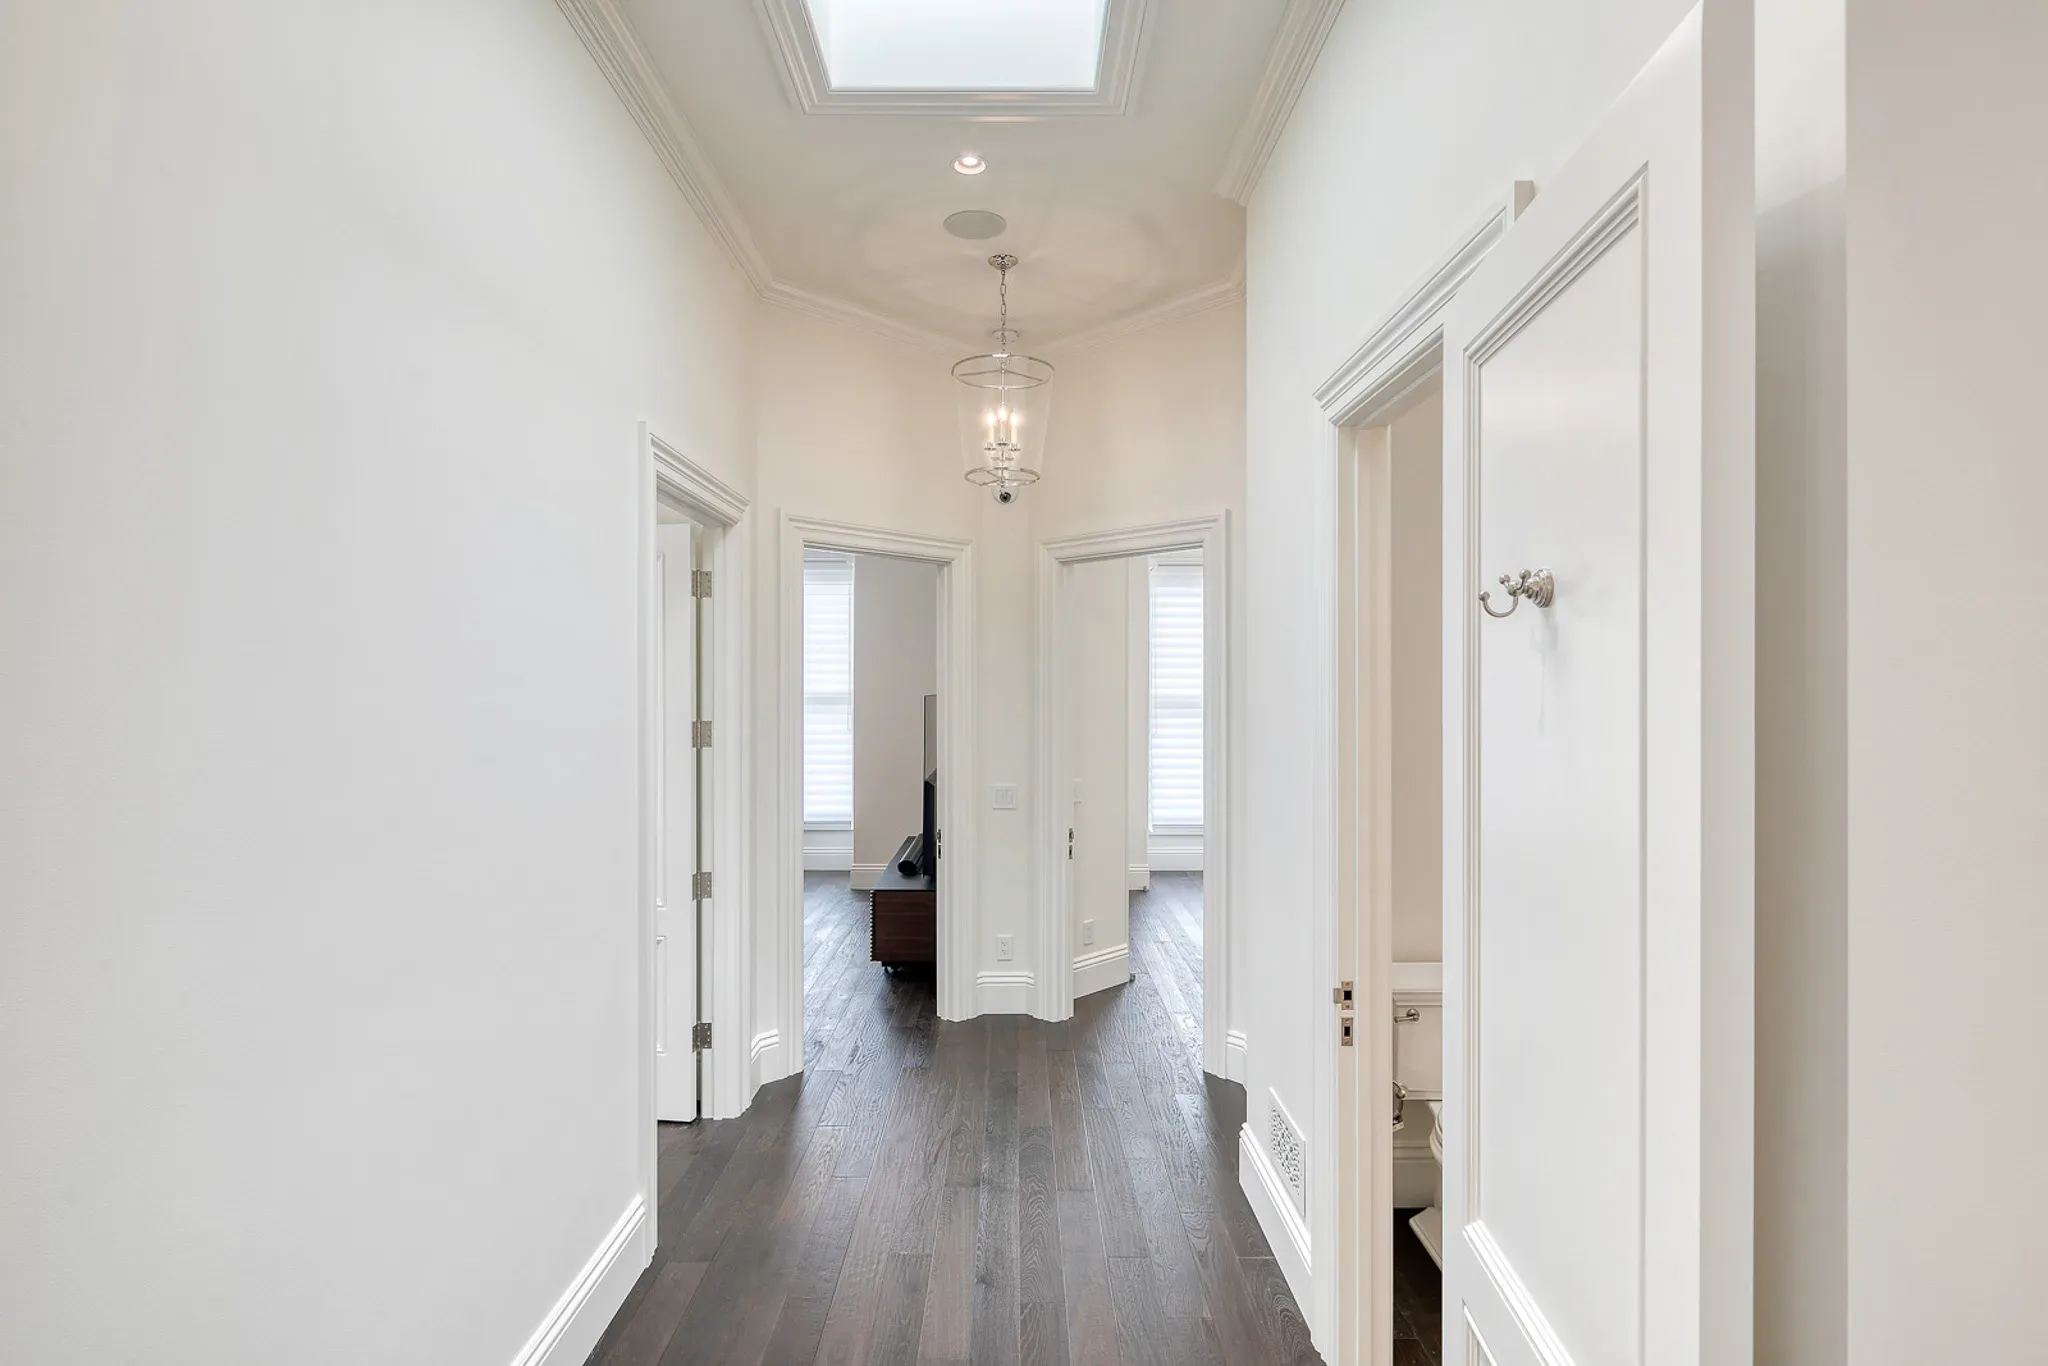 A white hallway with hardwood floors and a skylight.